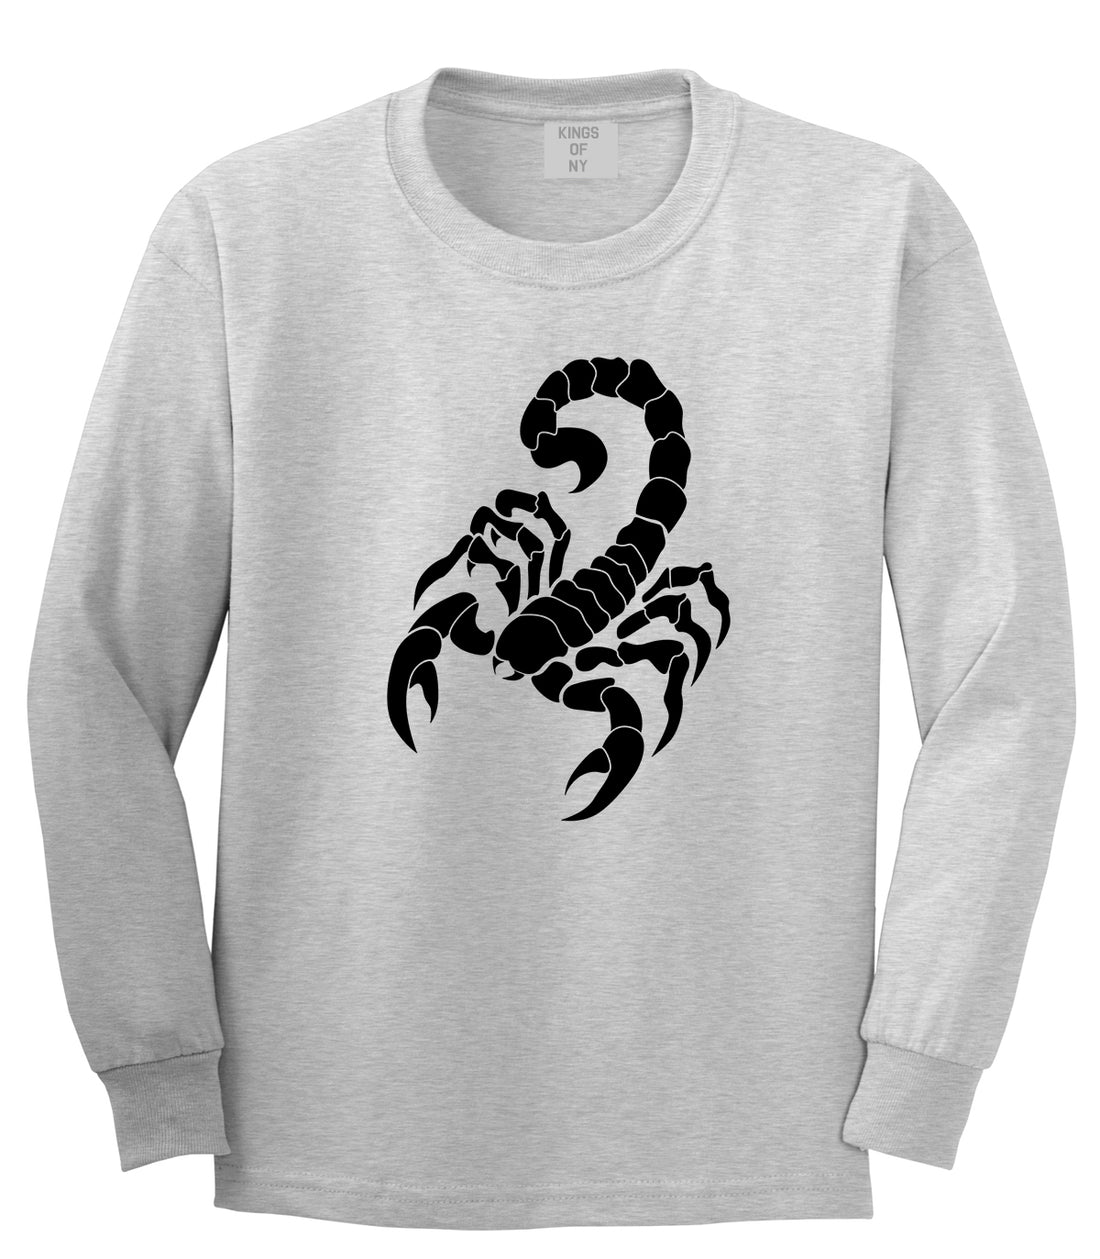 Scorpion Mens Long Sleeve T-Shirt Grey by Kings Of NY